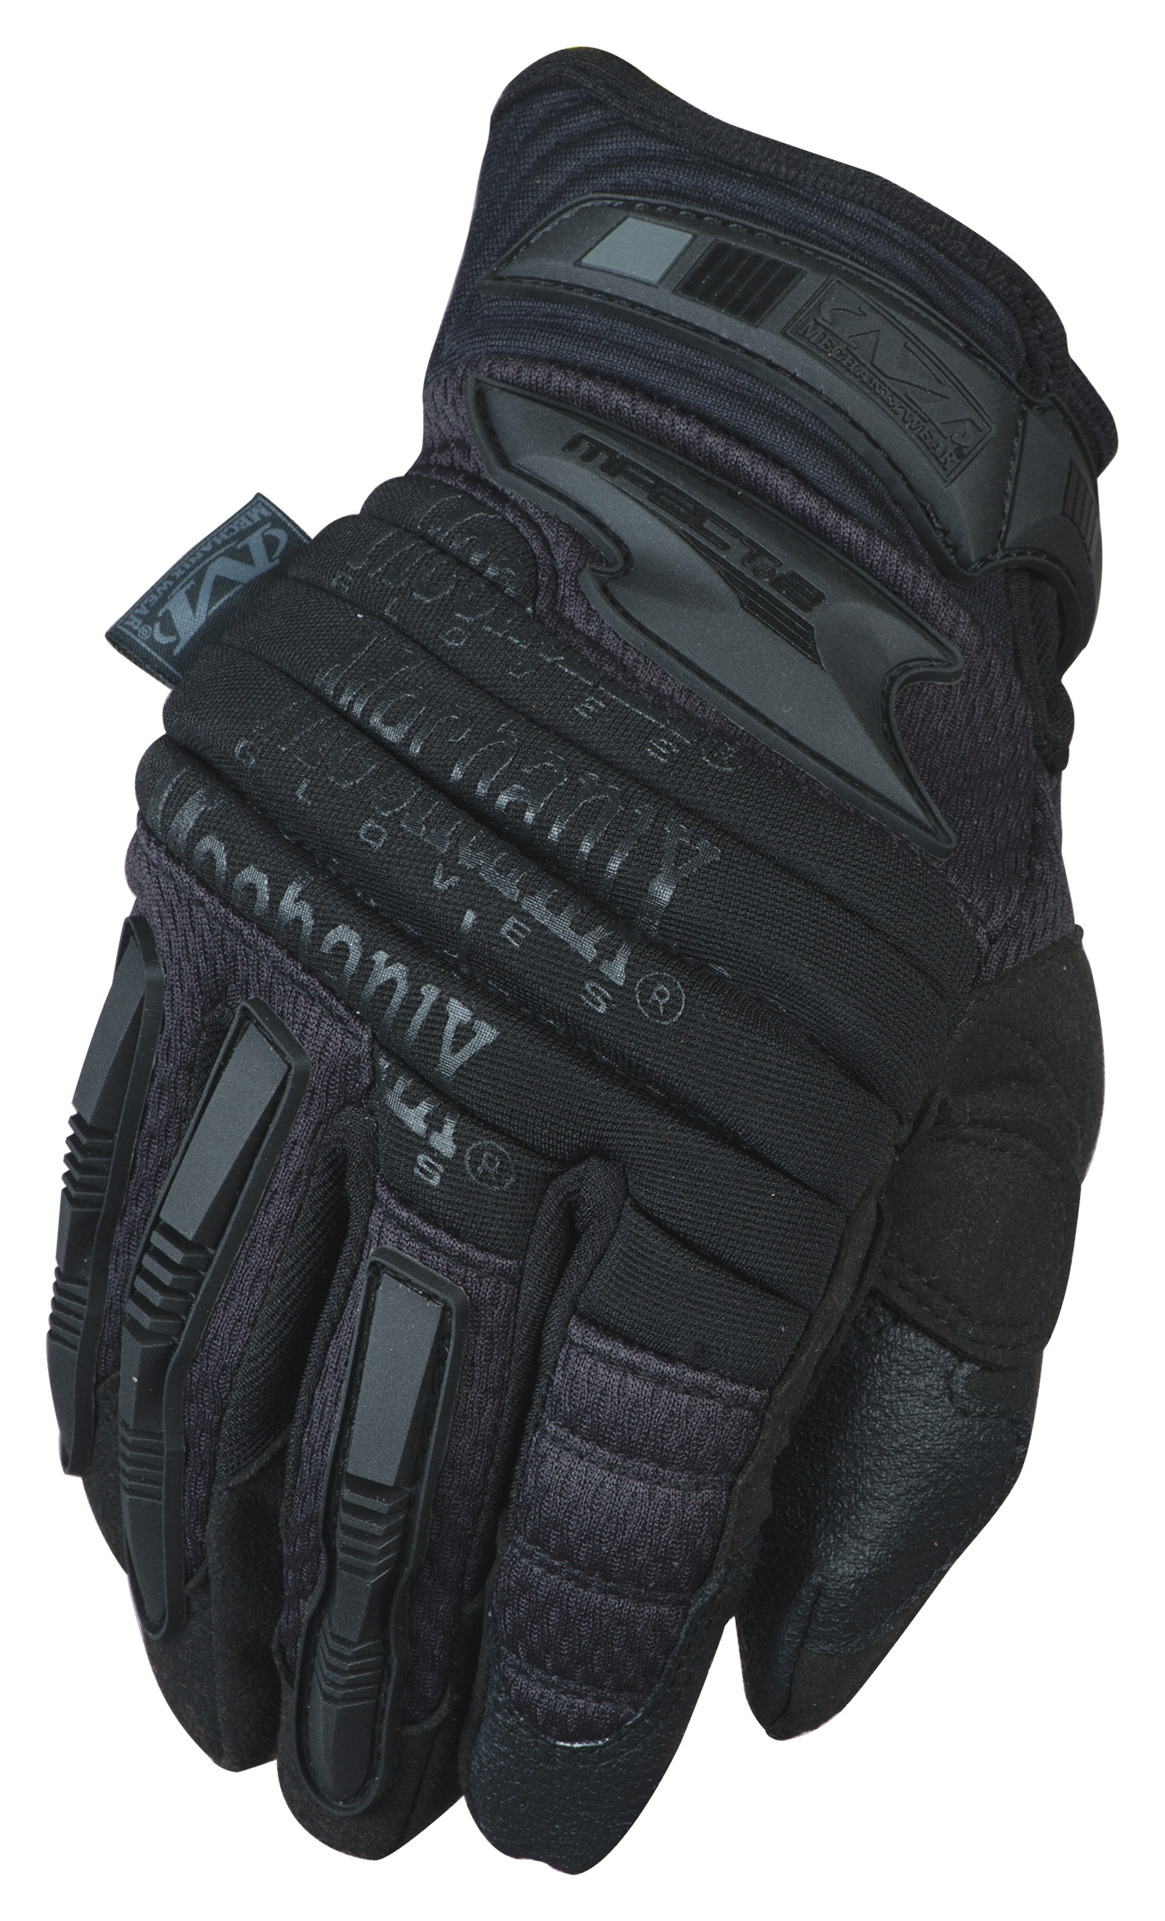 MECHANIX ochranné rukavice M-Pact 2 - Covert - čierne L/10